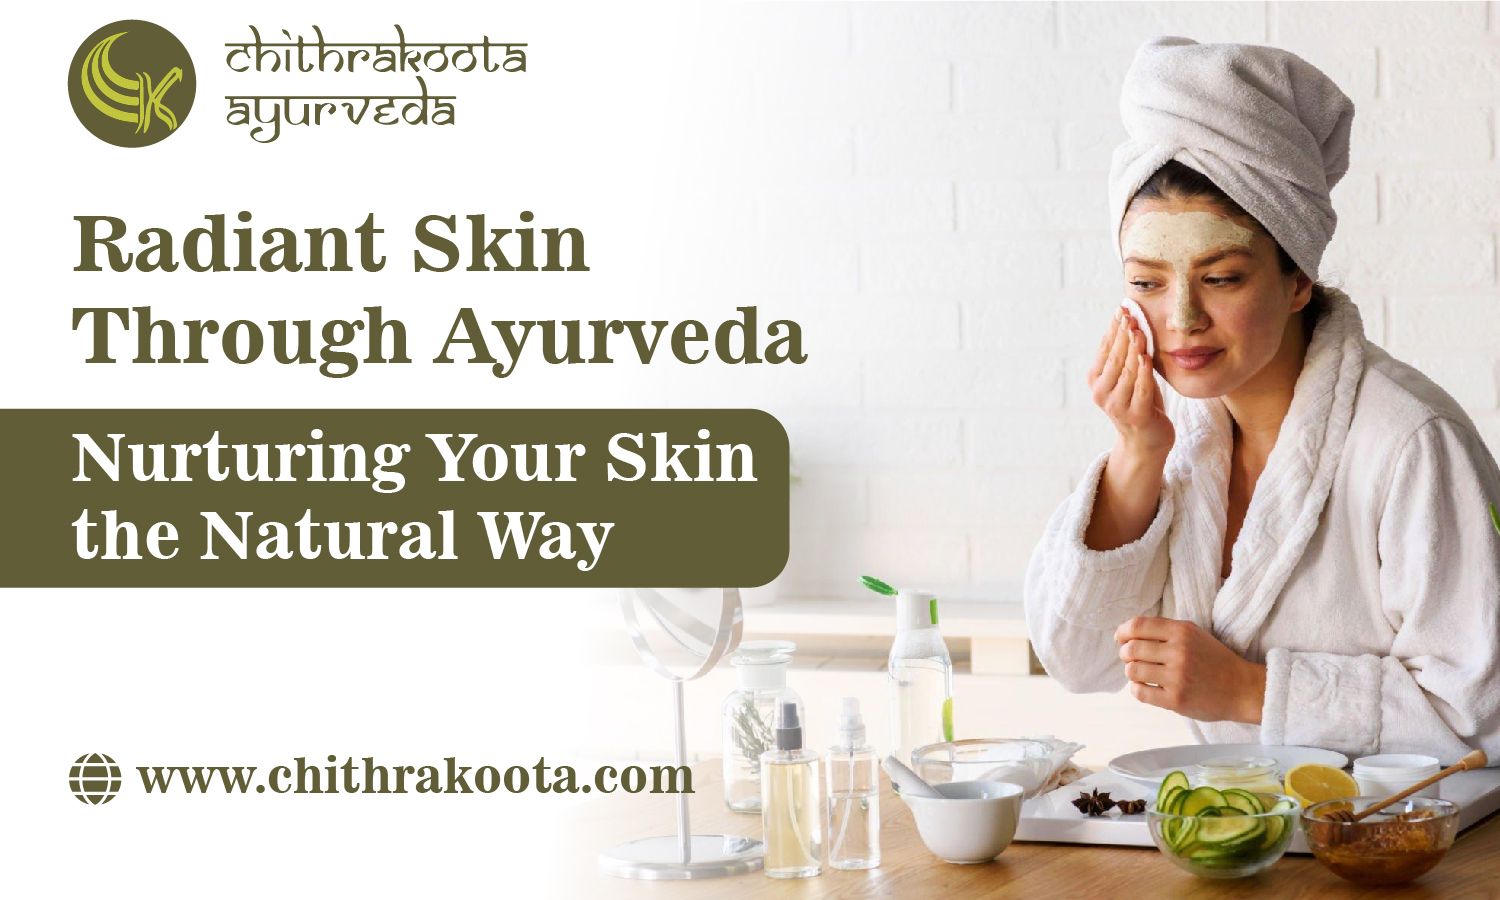 Ayurvedic Nutrition: Nurturing Your Body Type with Chithrakoota Ayurveda